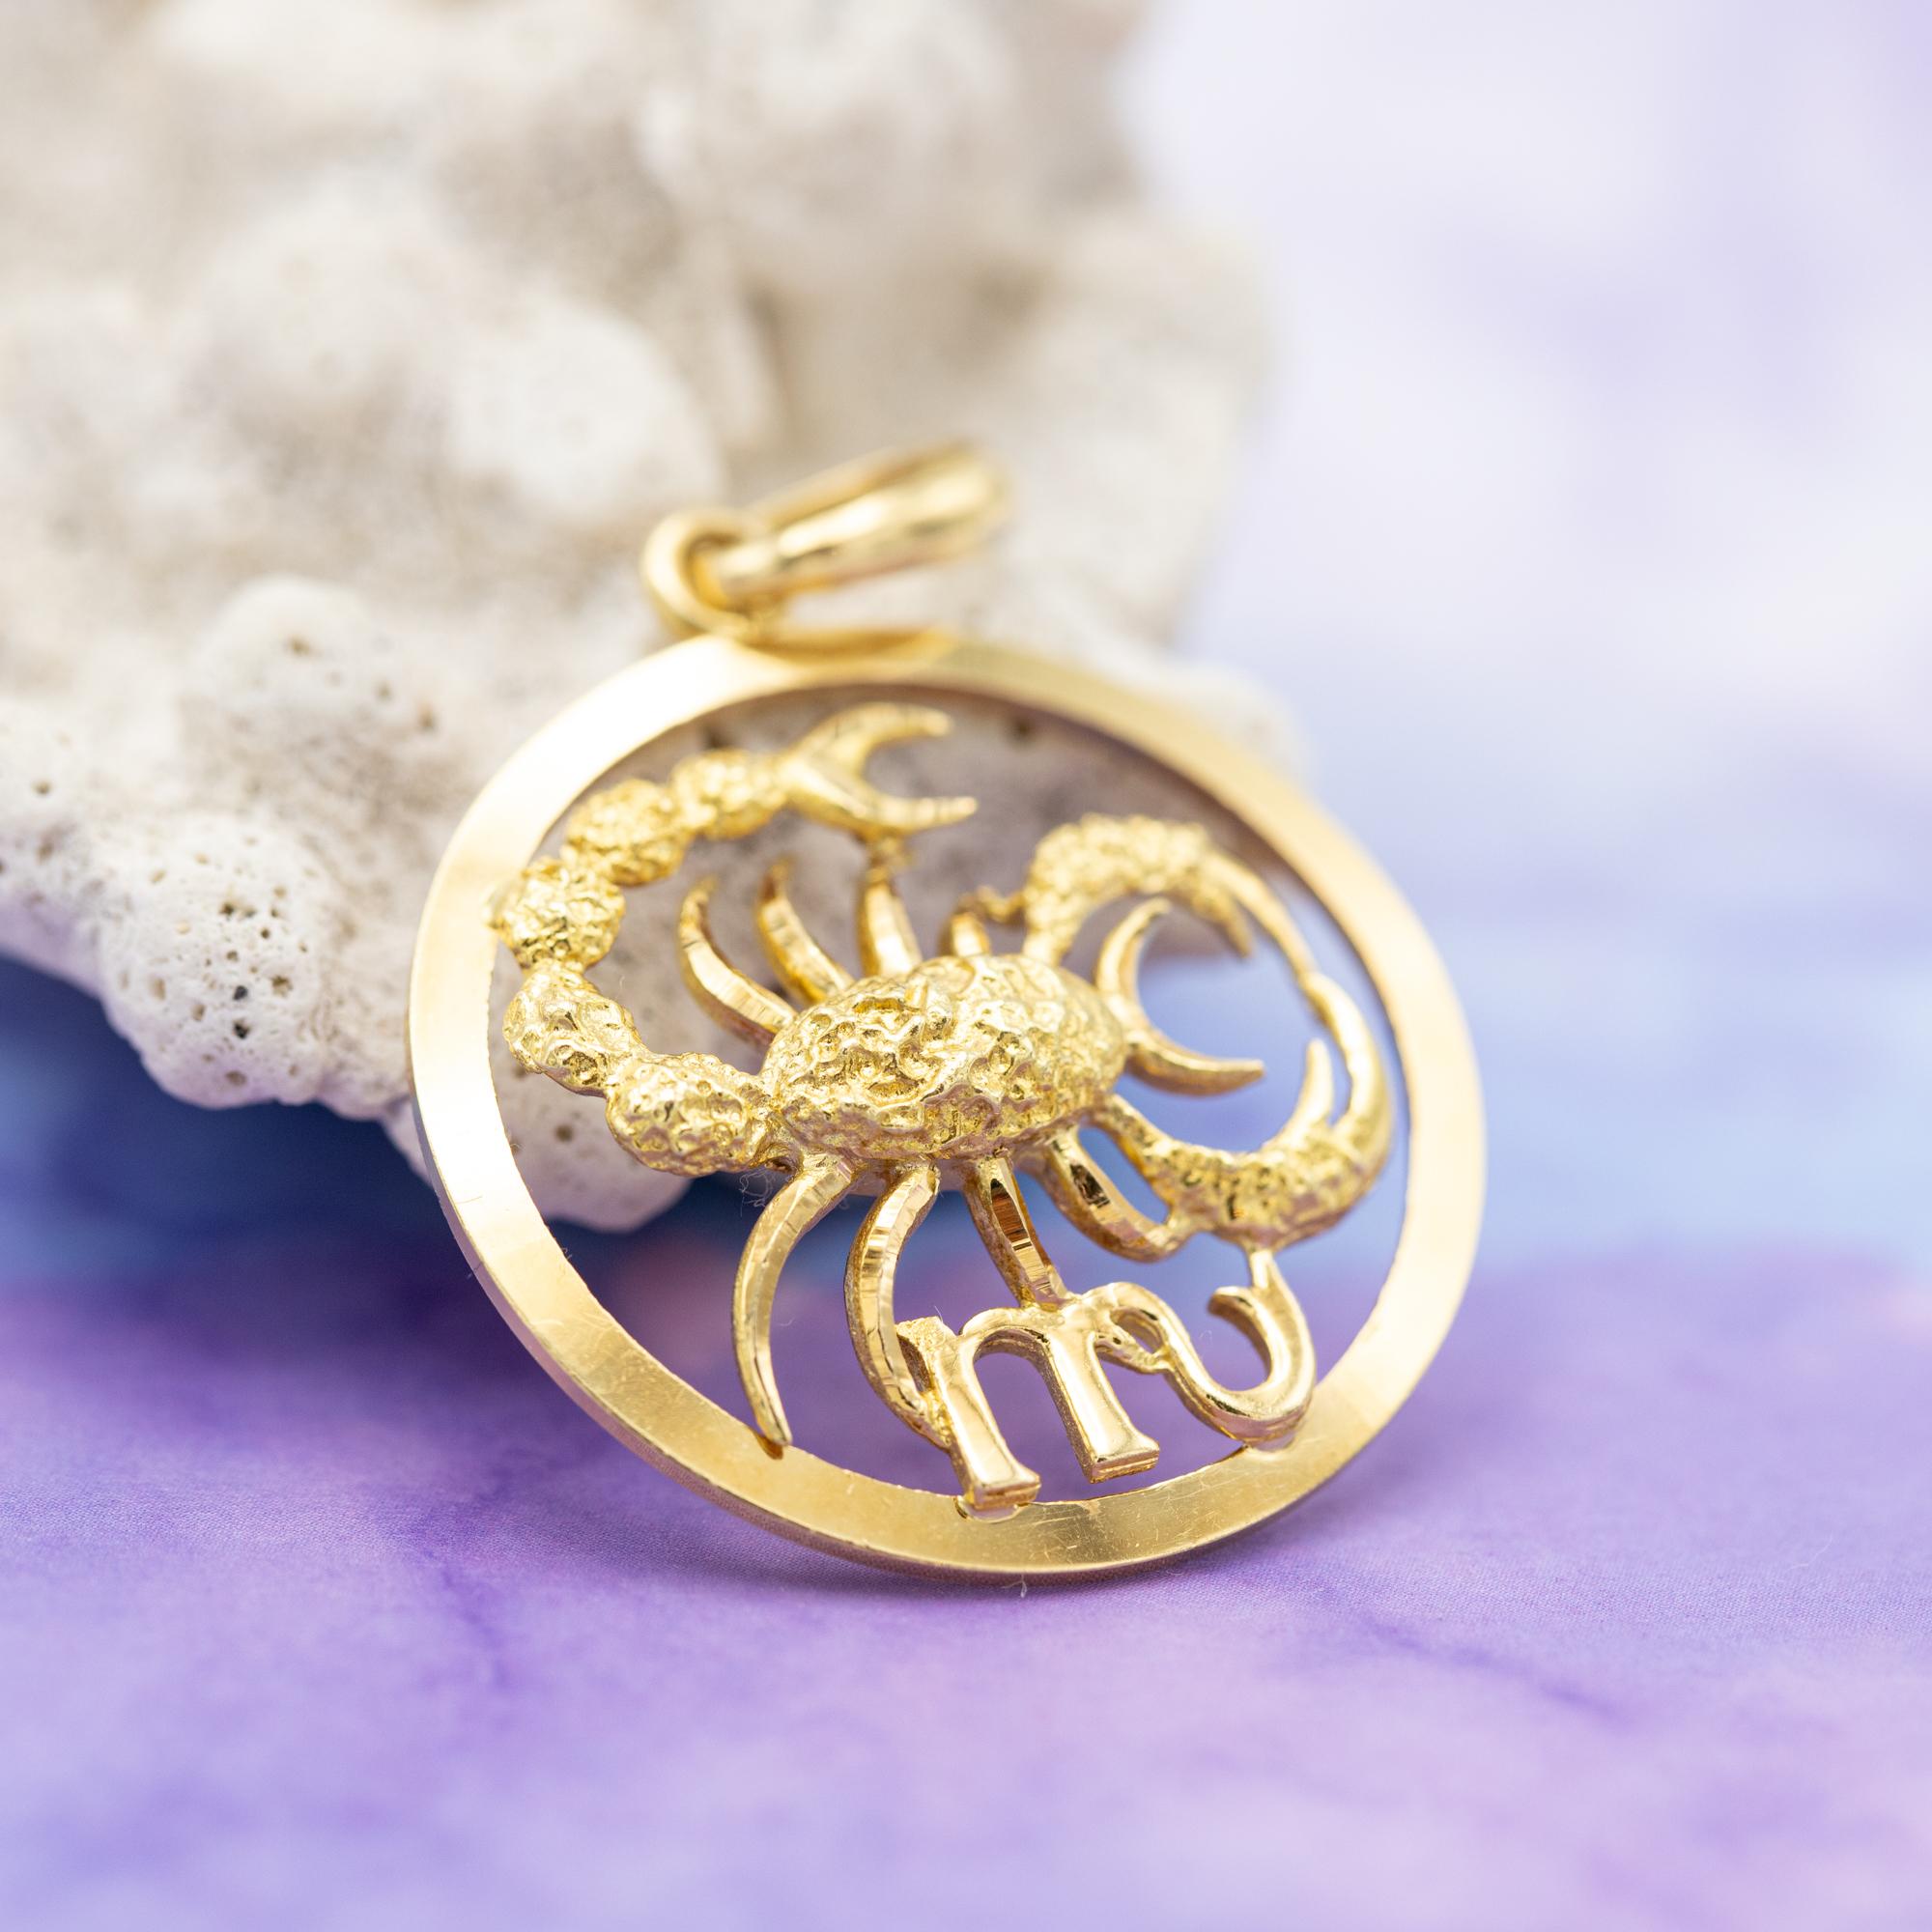 XL Large 18k zodiac charm pendant - Scorpio medallion - solid yellow gold For Sale 2